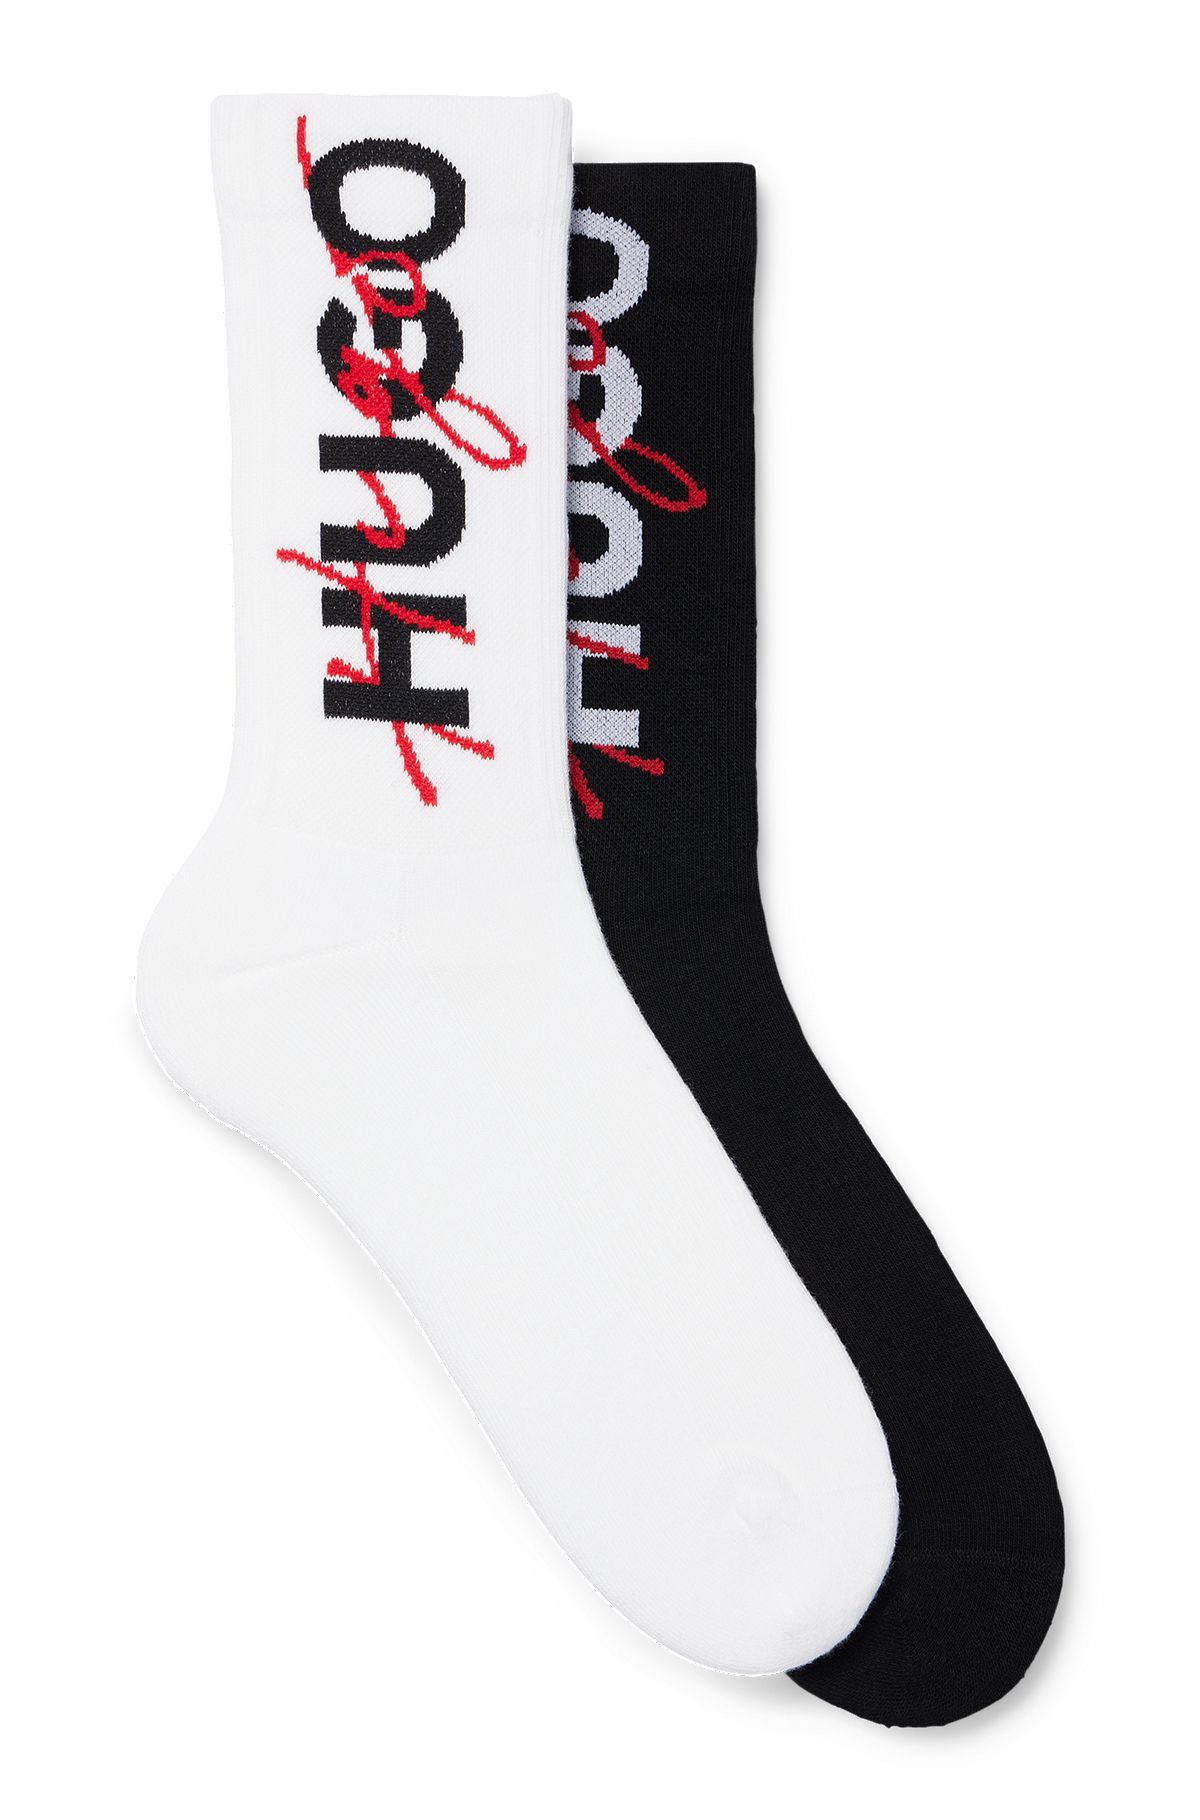 Zweier-Pack kurze Socken mit doppelten Logos, Schwarz